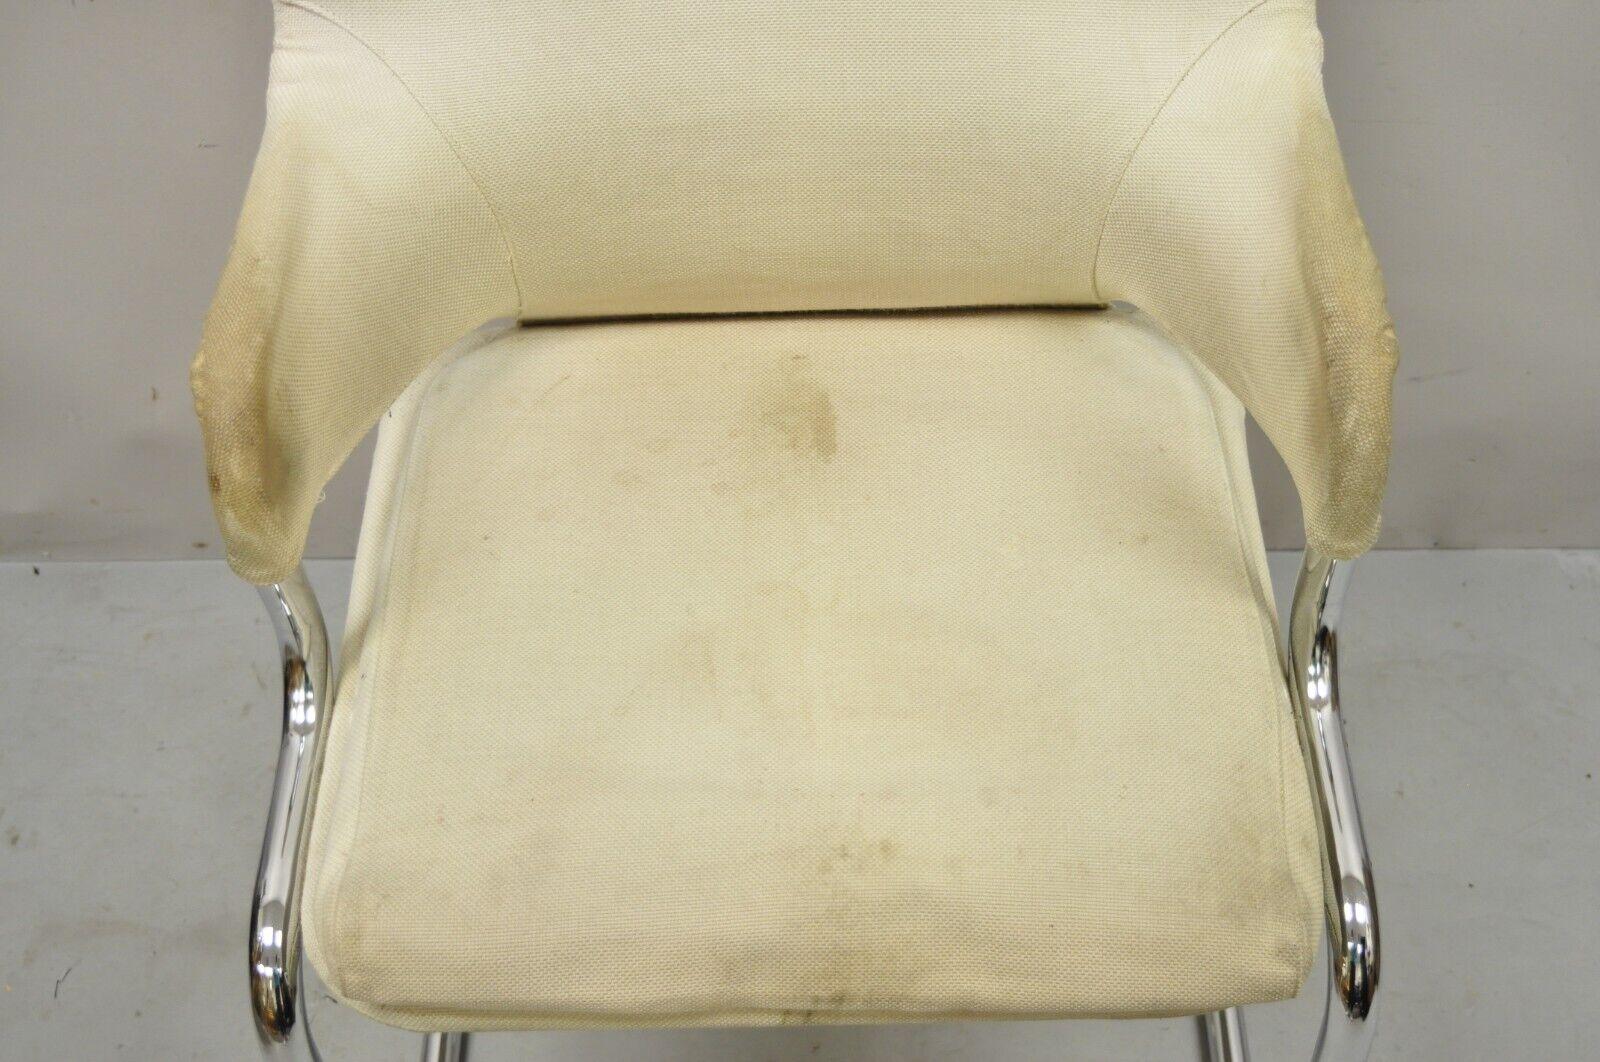 Vintage Mid-Century Modern Tubular Chrome Arm Chair with Burlap Seat For Sale 1